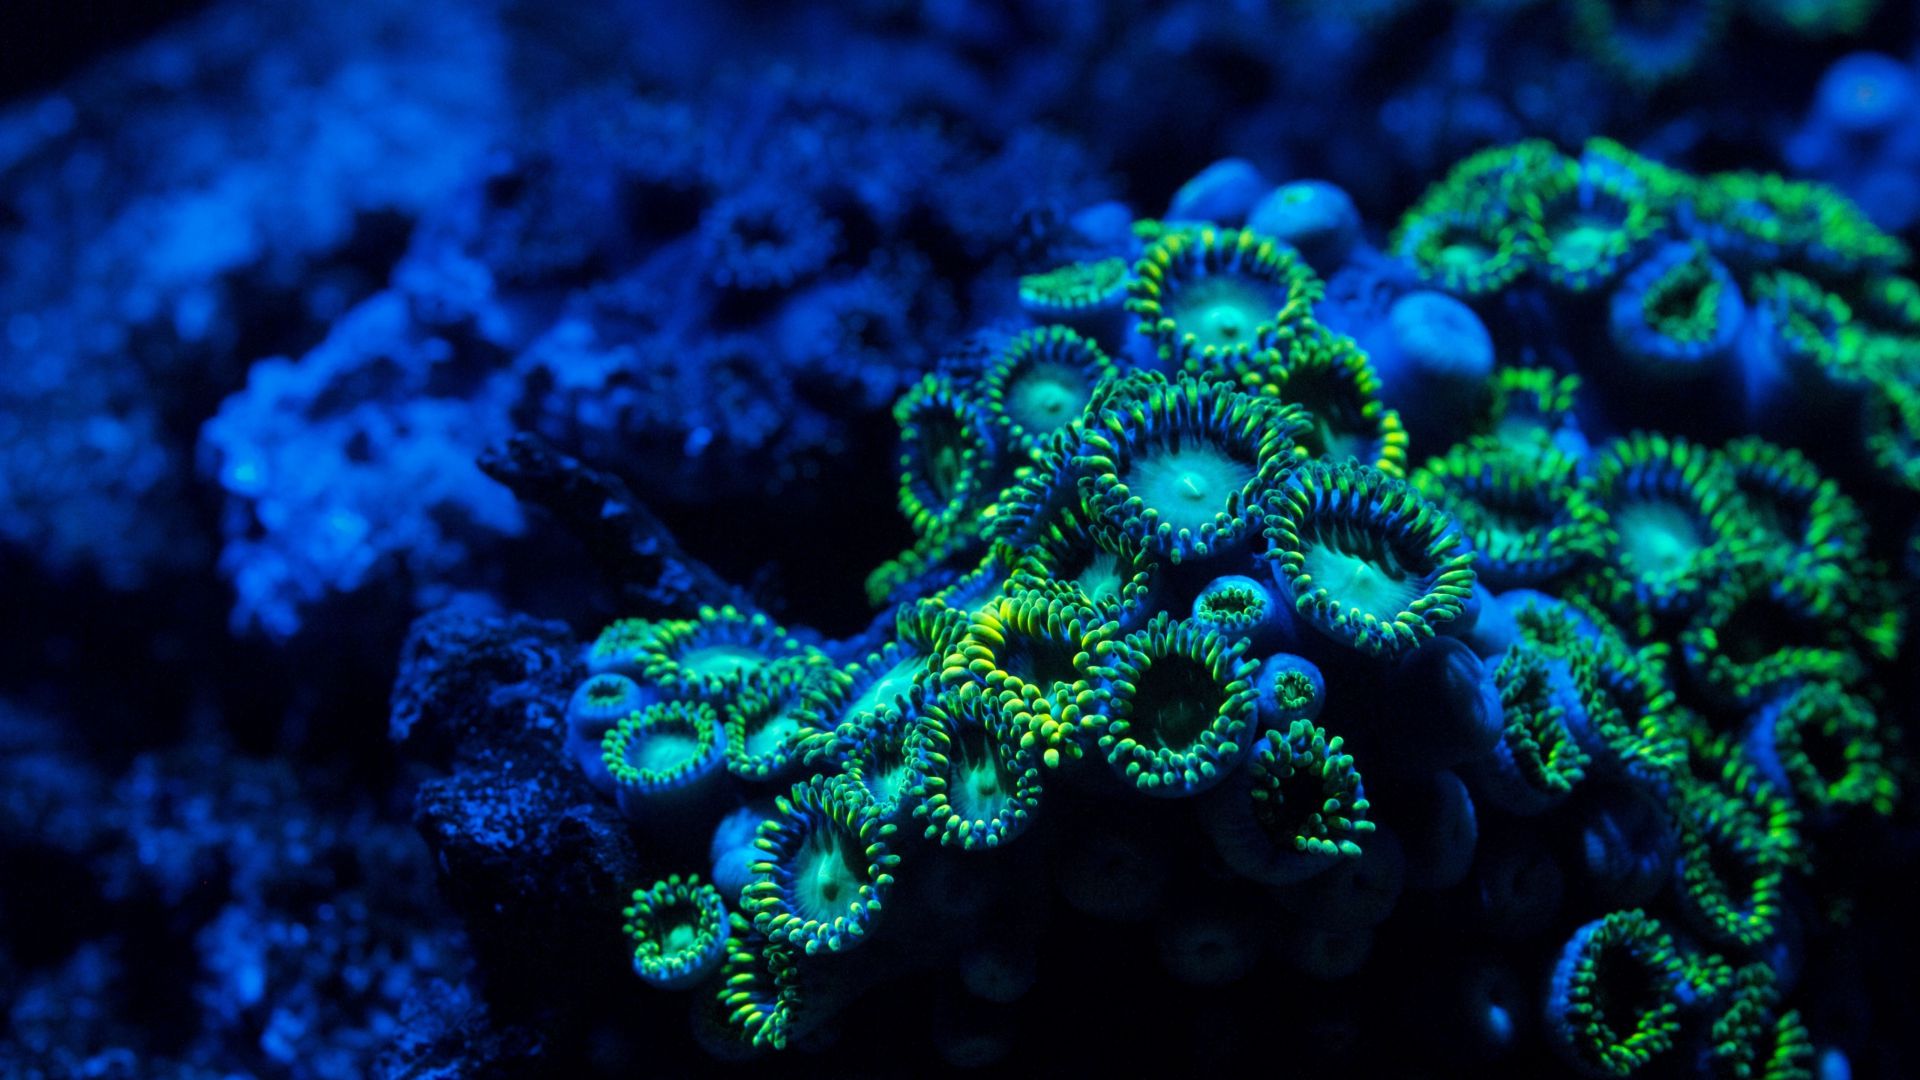 Коралл, 5k, 4k, 8k, Зоантарии, водой, Coral, 5k, 4k wallpaper, 8k, zoanthids, underwater (horizontal)